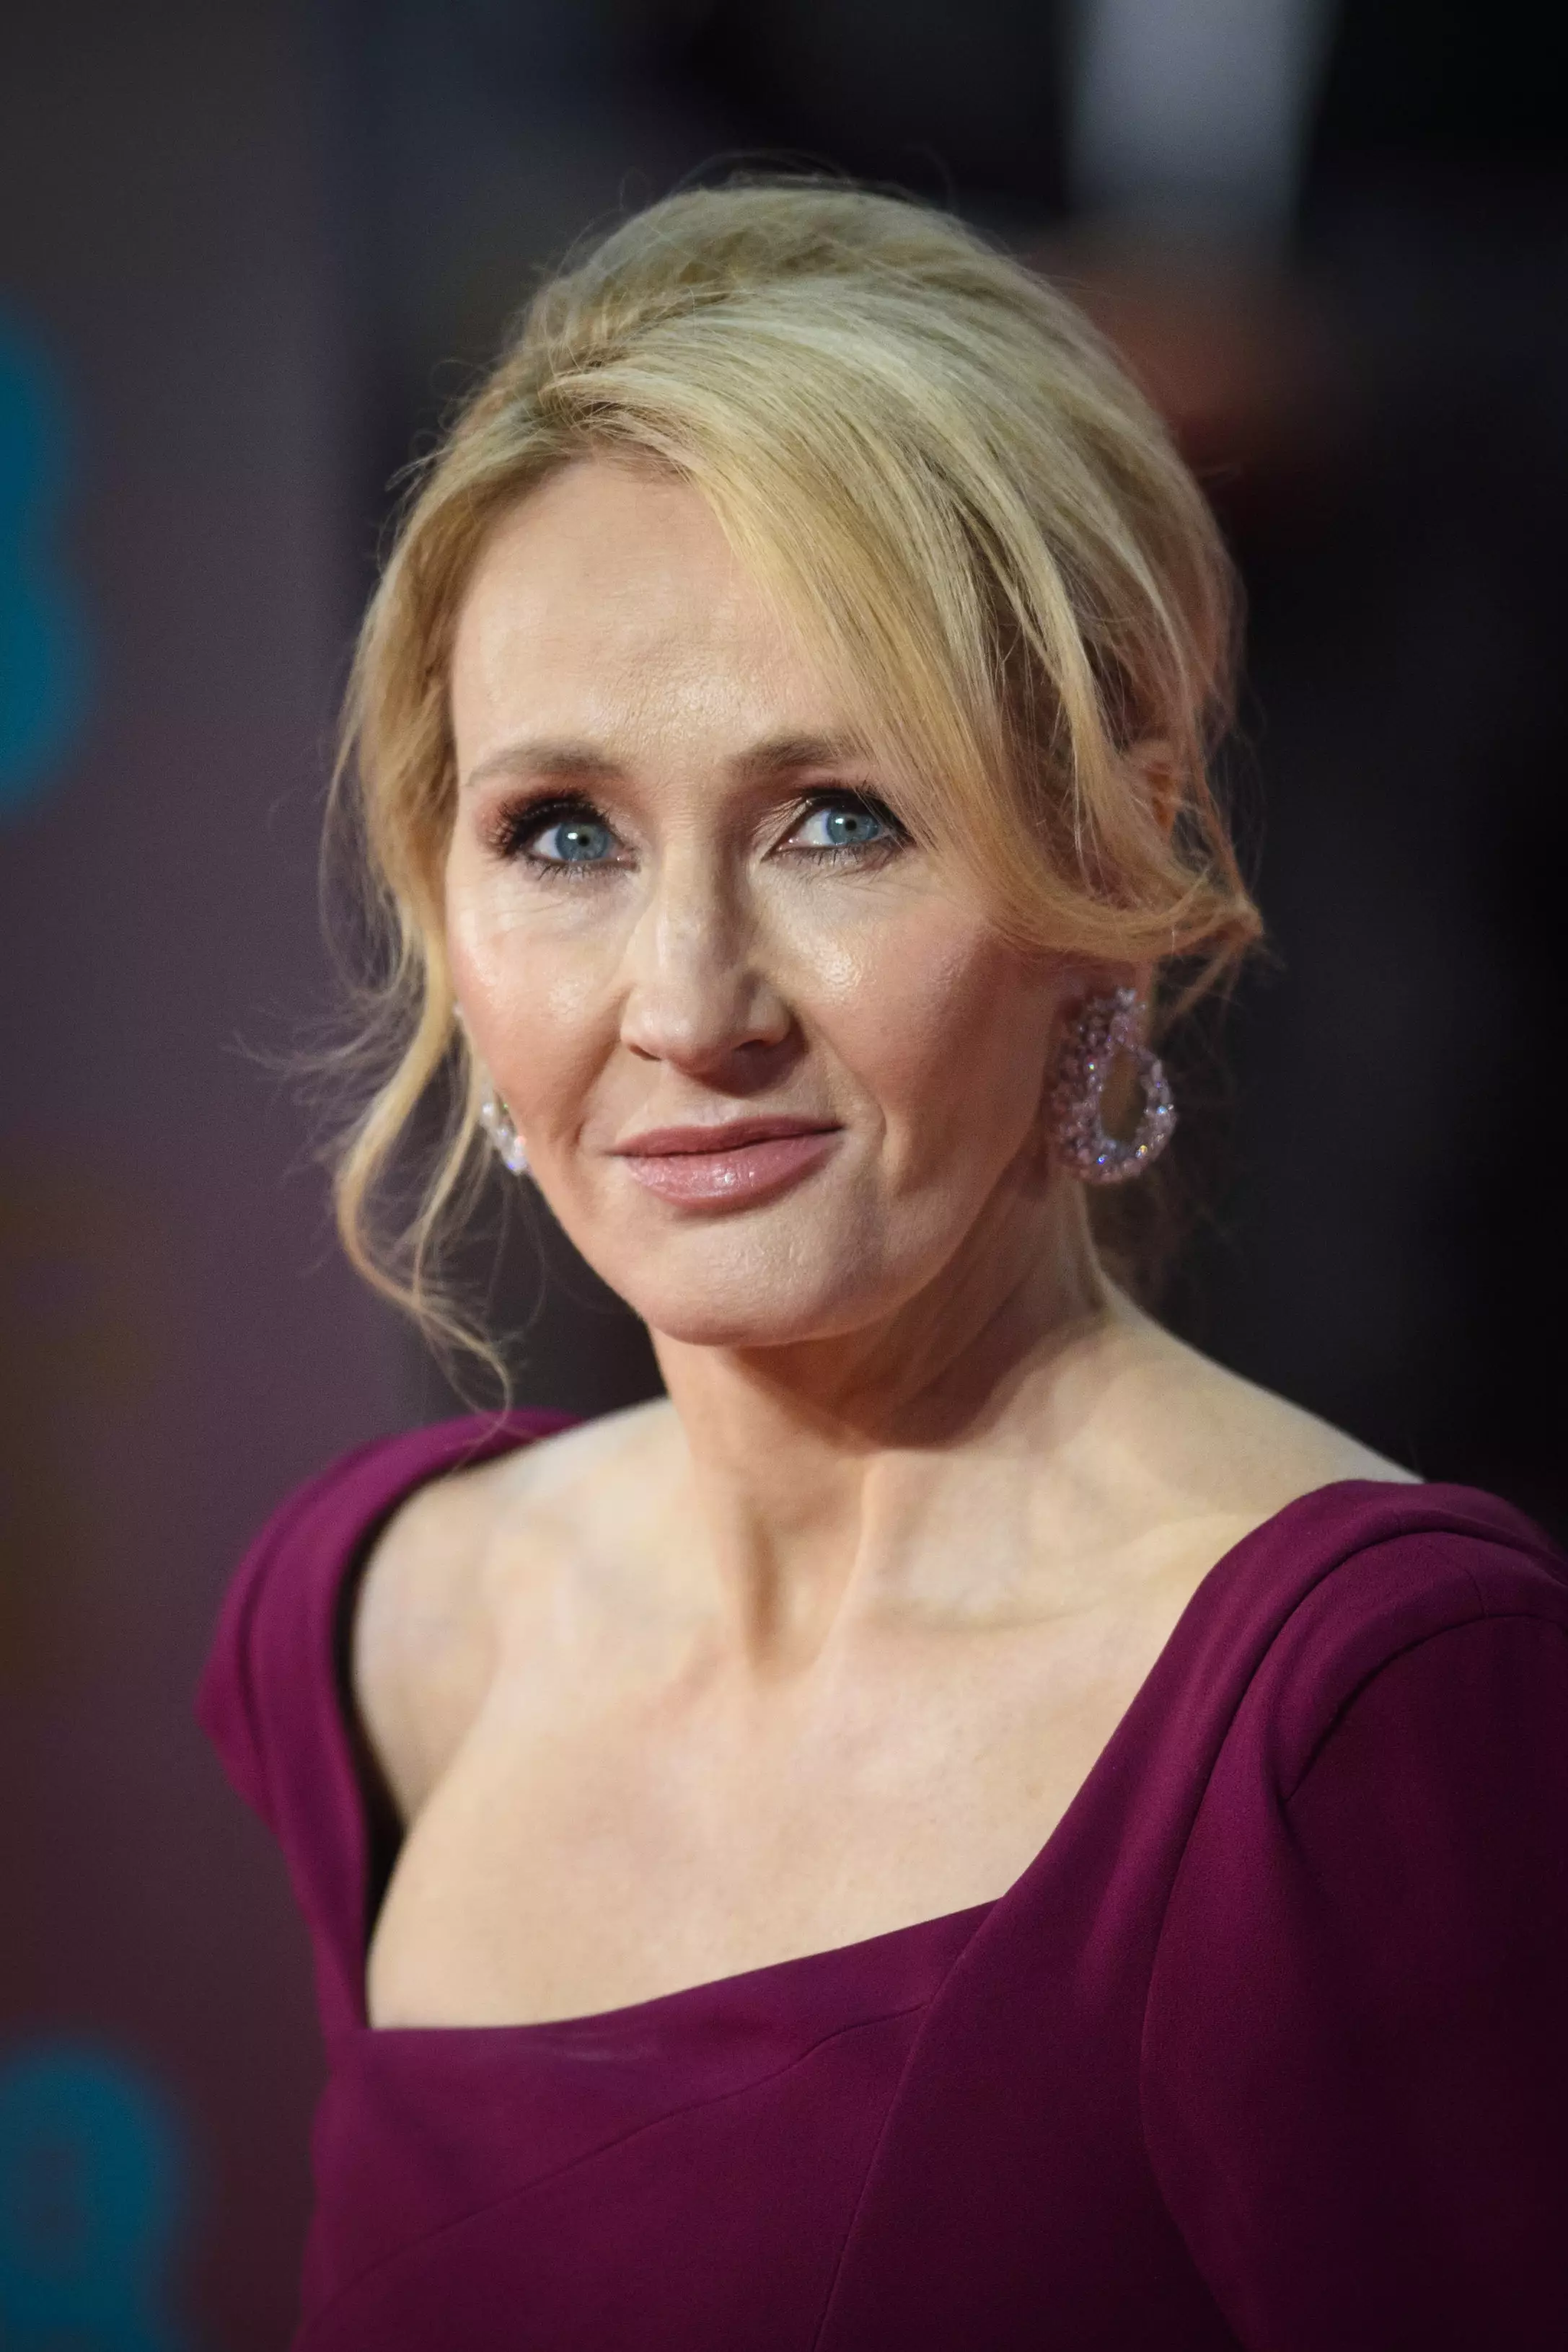 JK Rowling has made multiple donations to University of Edinburgh.